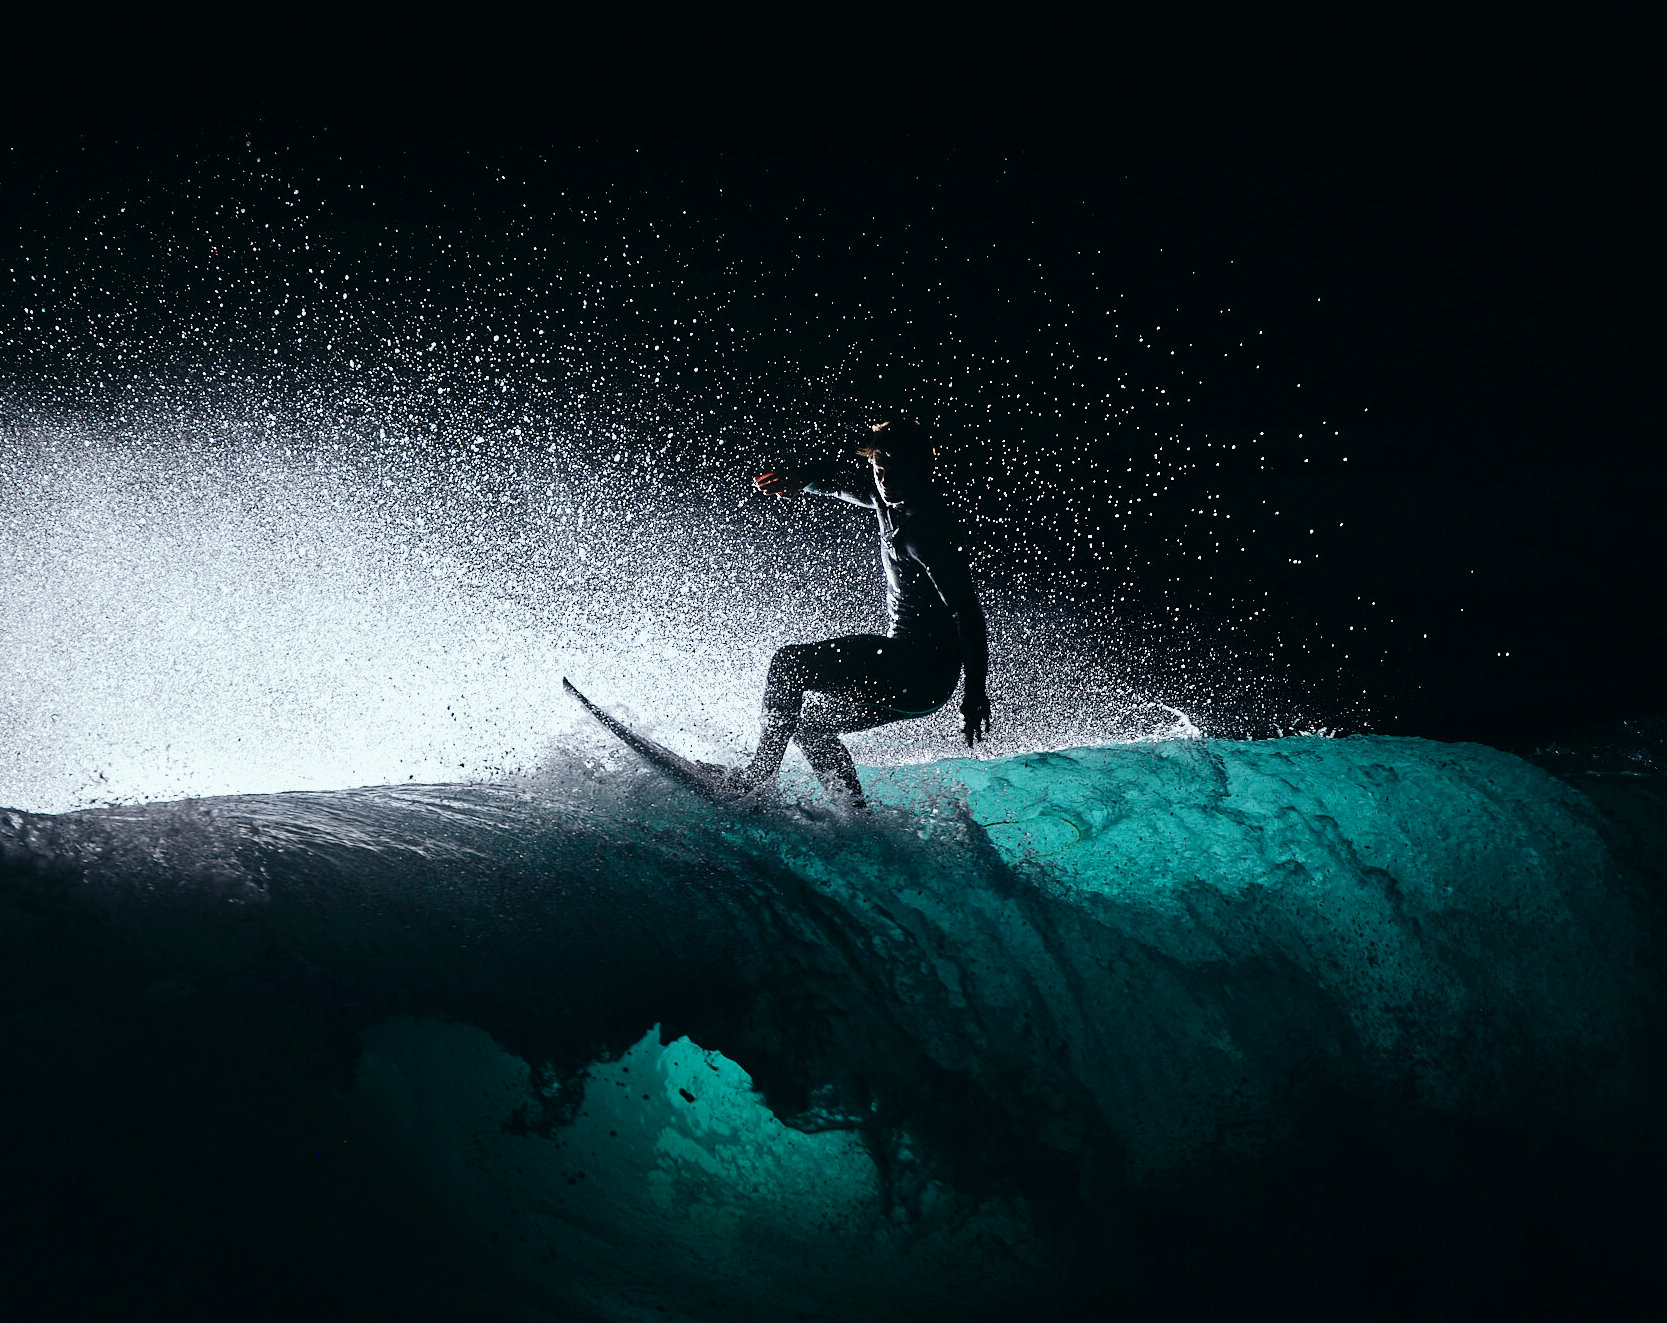 Night Surfing